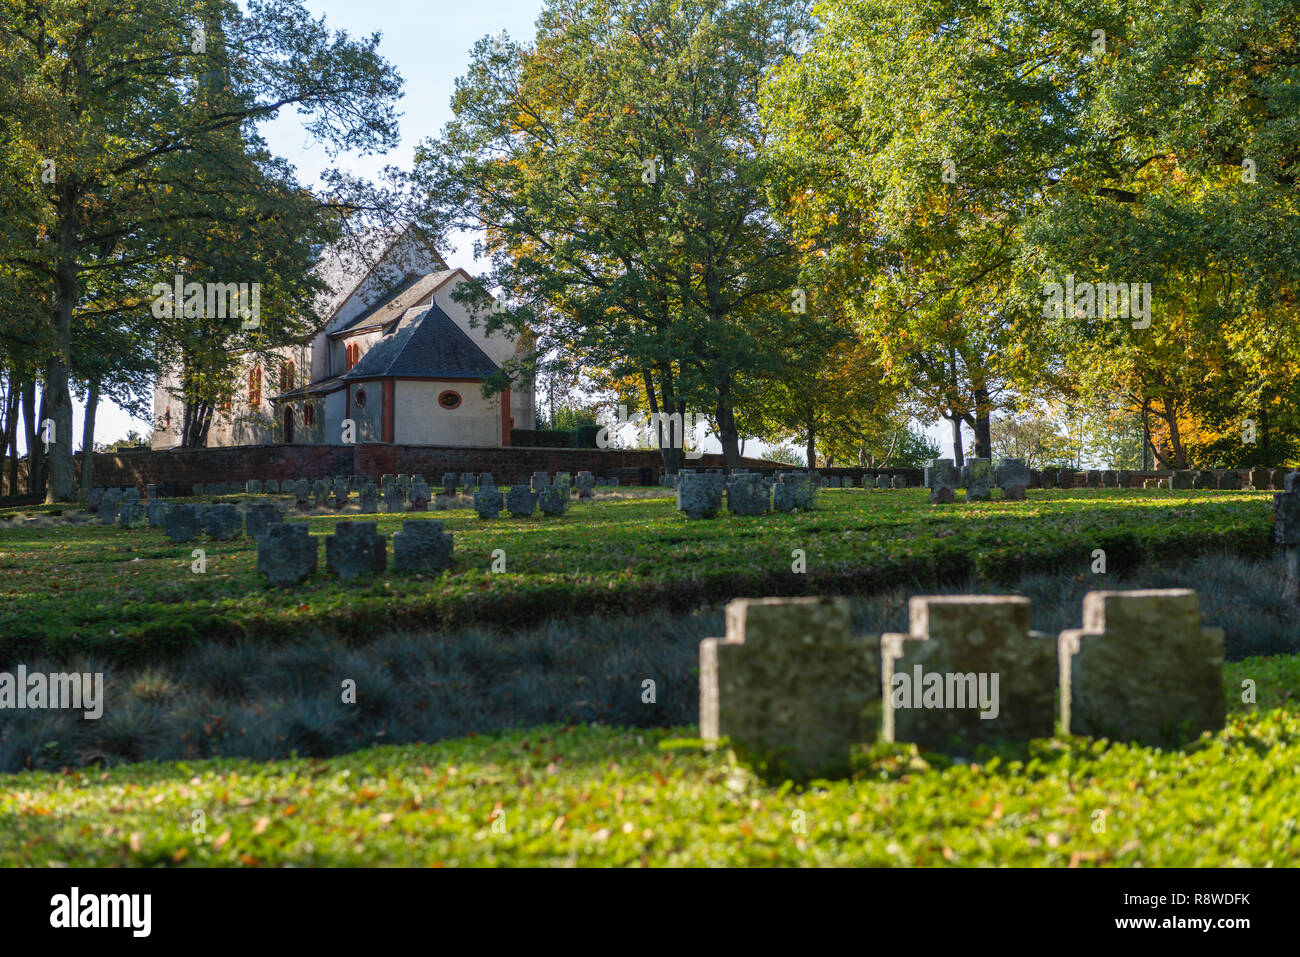 War memorial cemetery of WW I and WW II, village church, Kastel-Staadt, Trier-Saarburg, Rhineland-Palantine, Germany, Europe Stock Photo